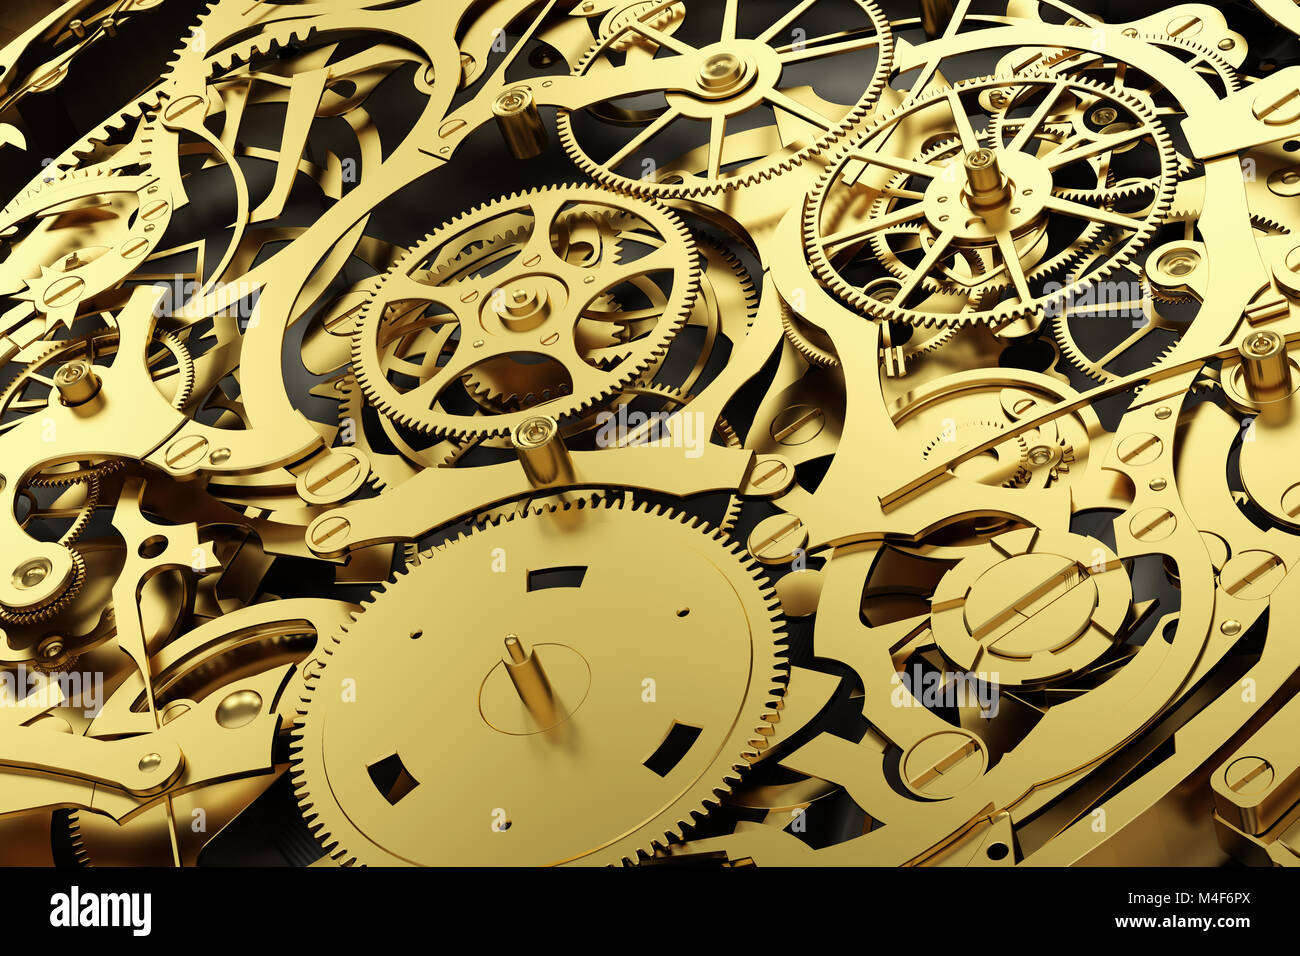 Gold mechanism, clockwork with working gears. Stock Photo